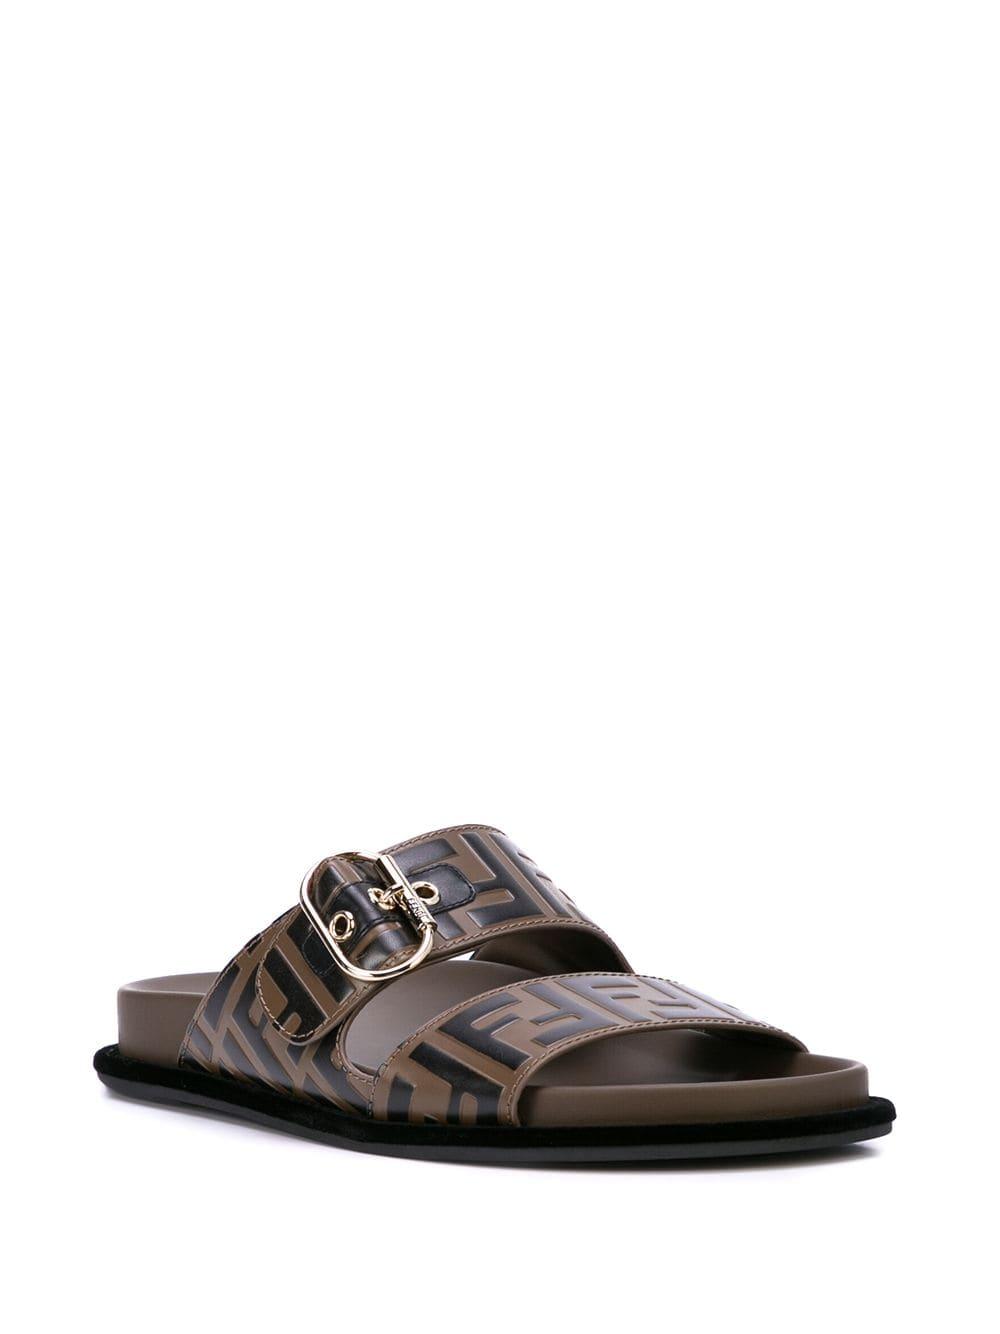 Fendi Leather Ff Motif Double-strap Flat Sandals in Black - Lyst